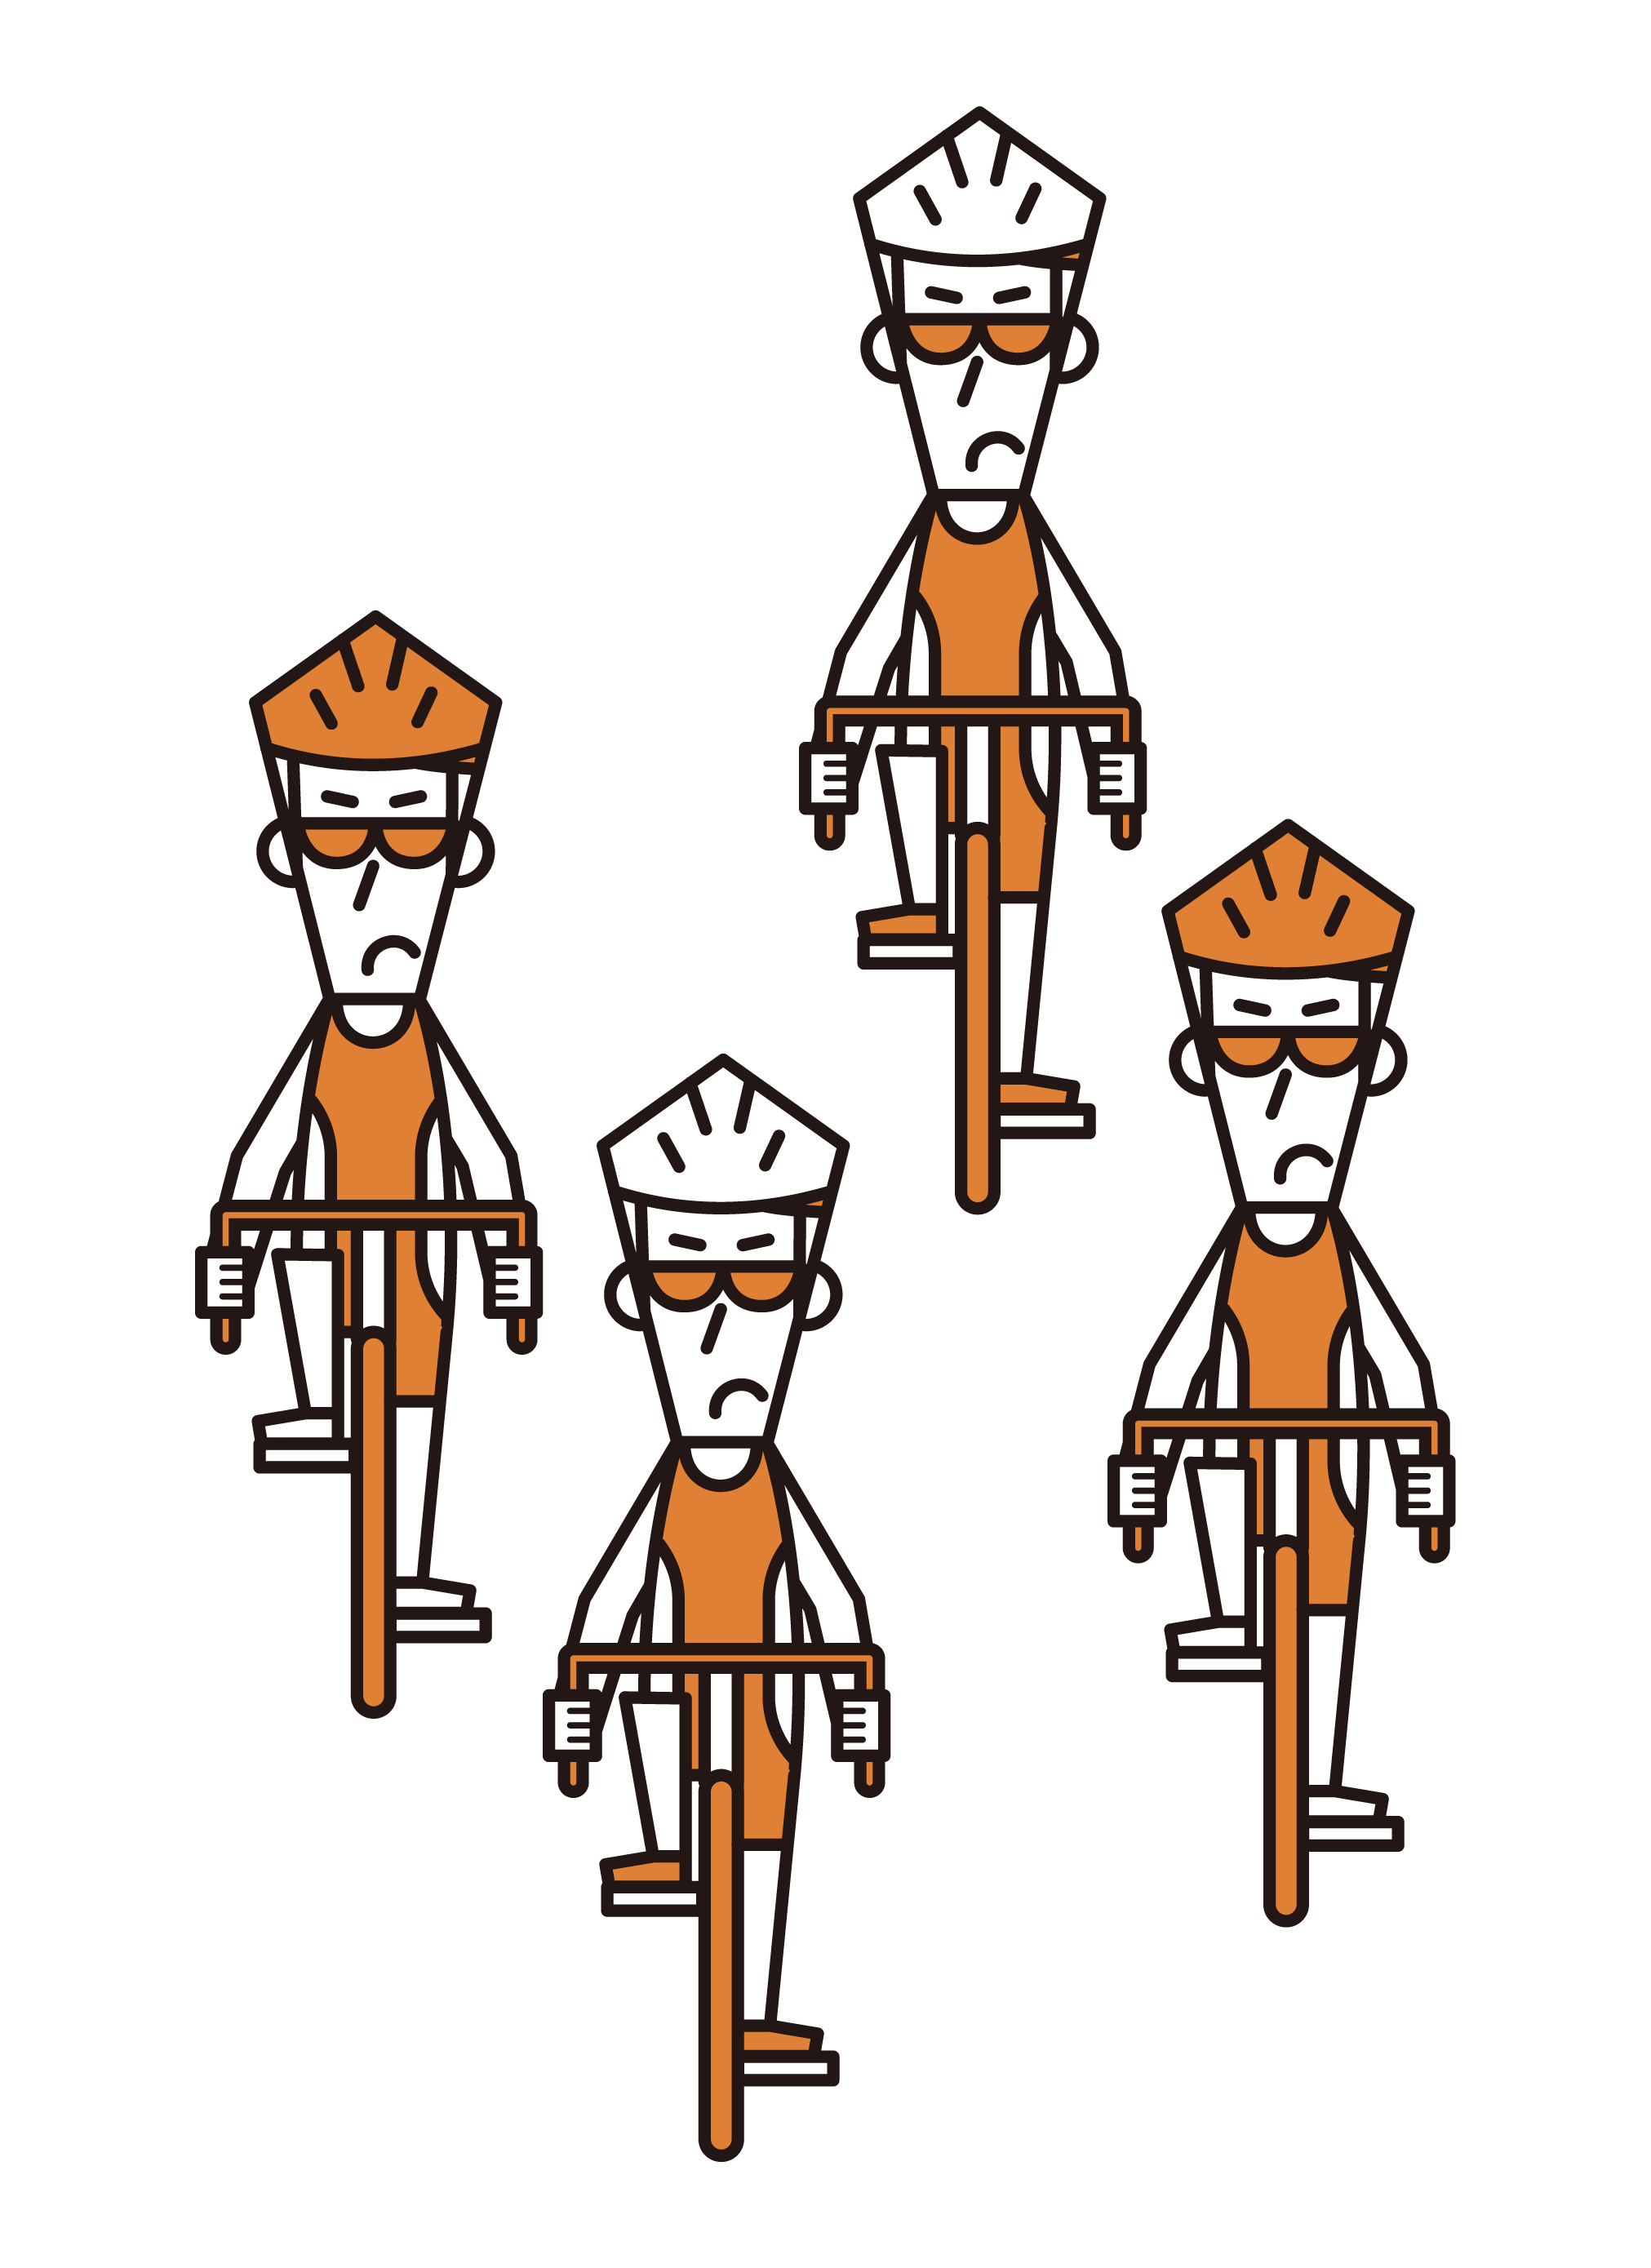 Illustration of a triathlon or cyclist (male) racing